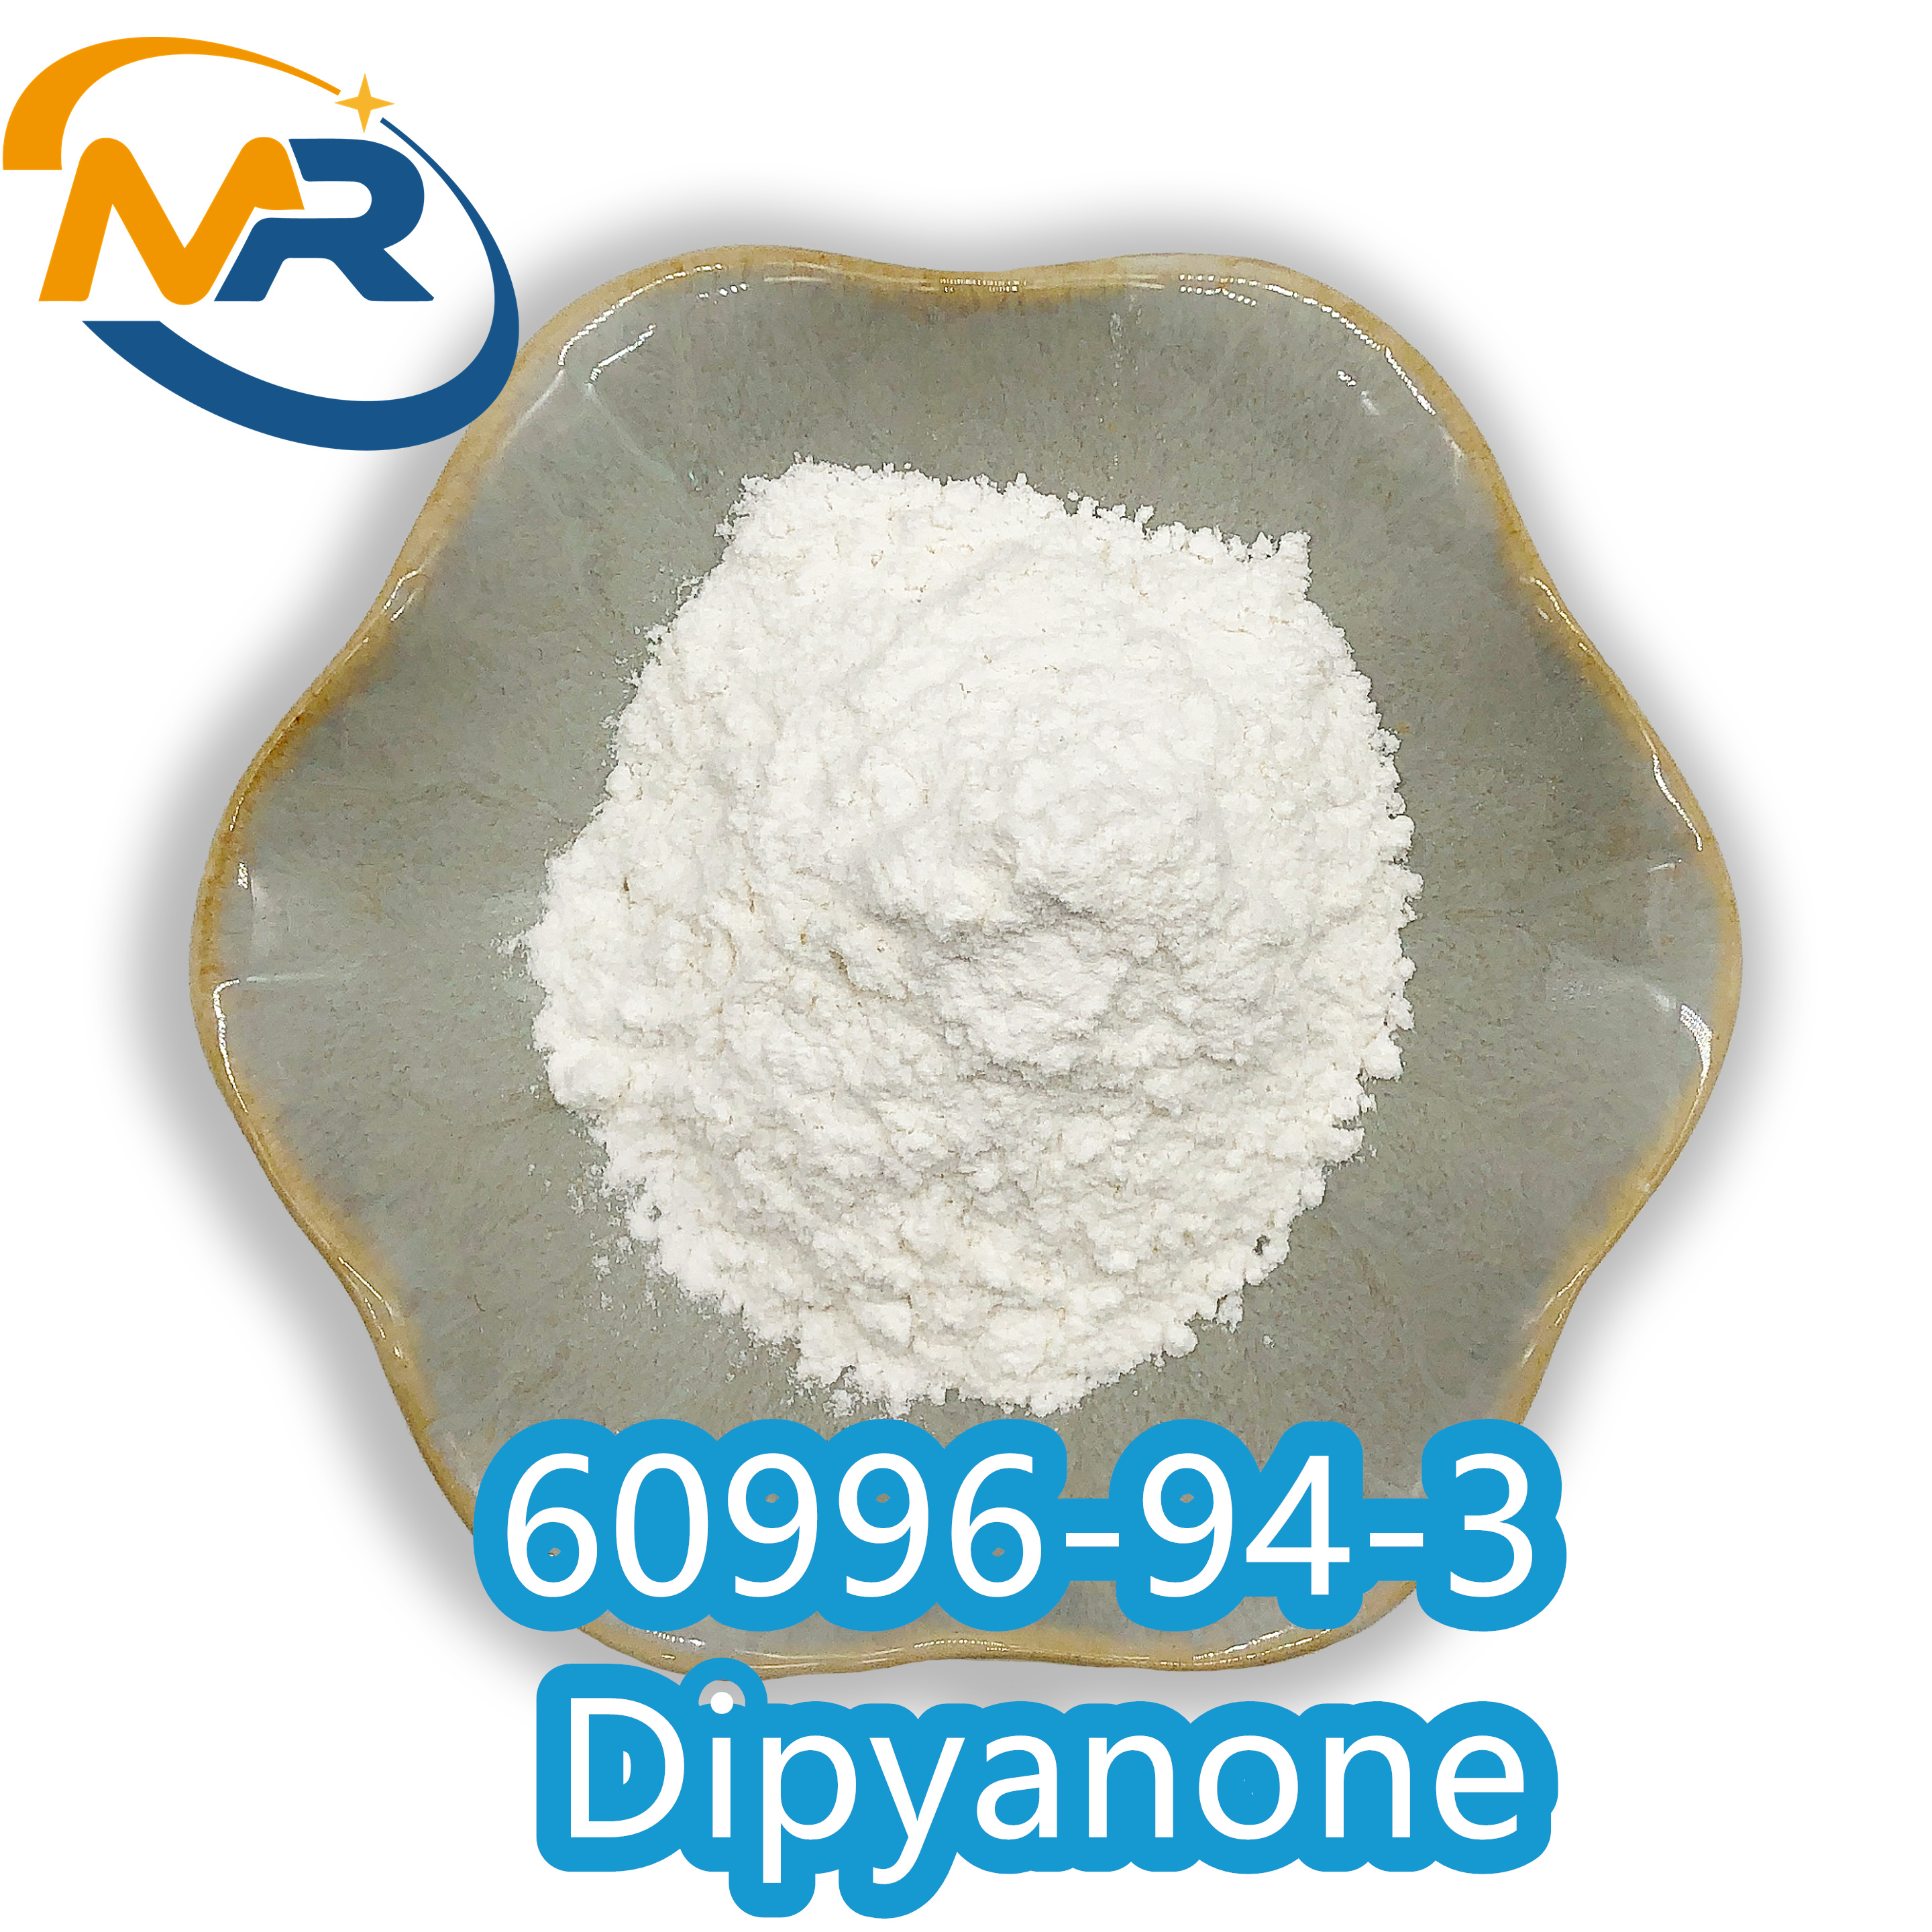 99% White Powder CAS 60996-94-3 Dipyanone